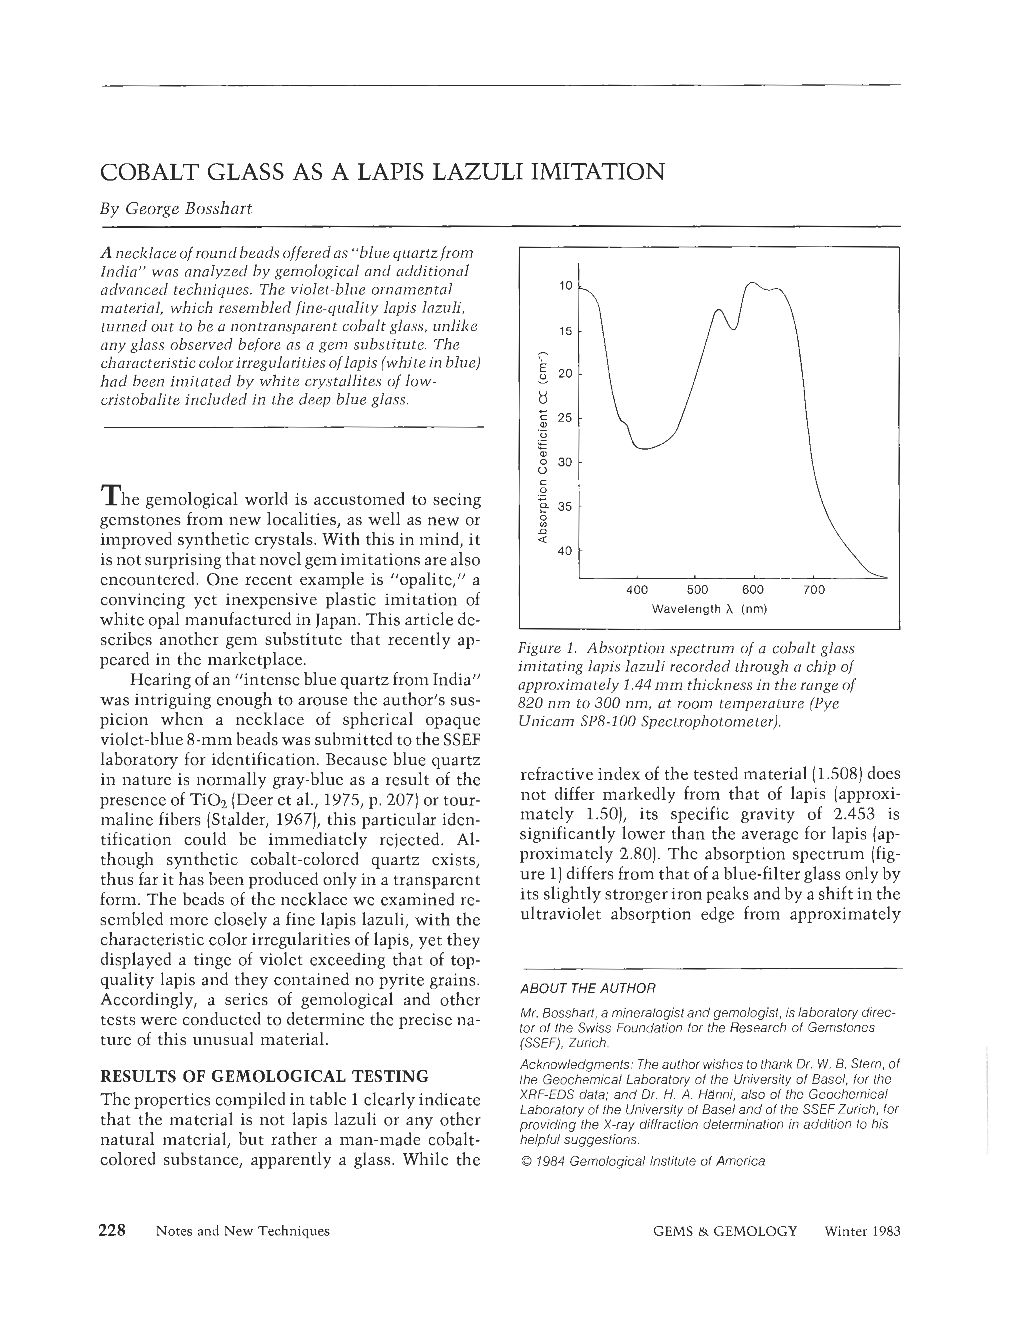 COBALT GLASS AS a LAPIS LAZULI IMITATION by George Bosshart